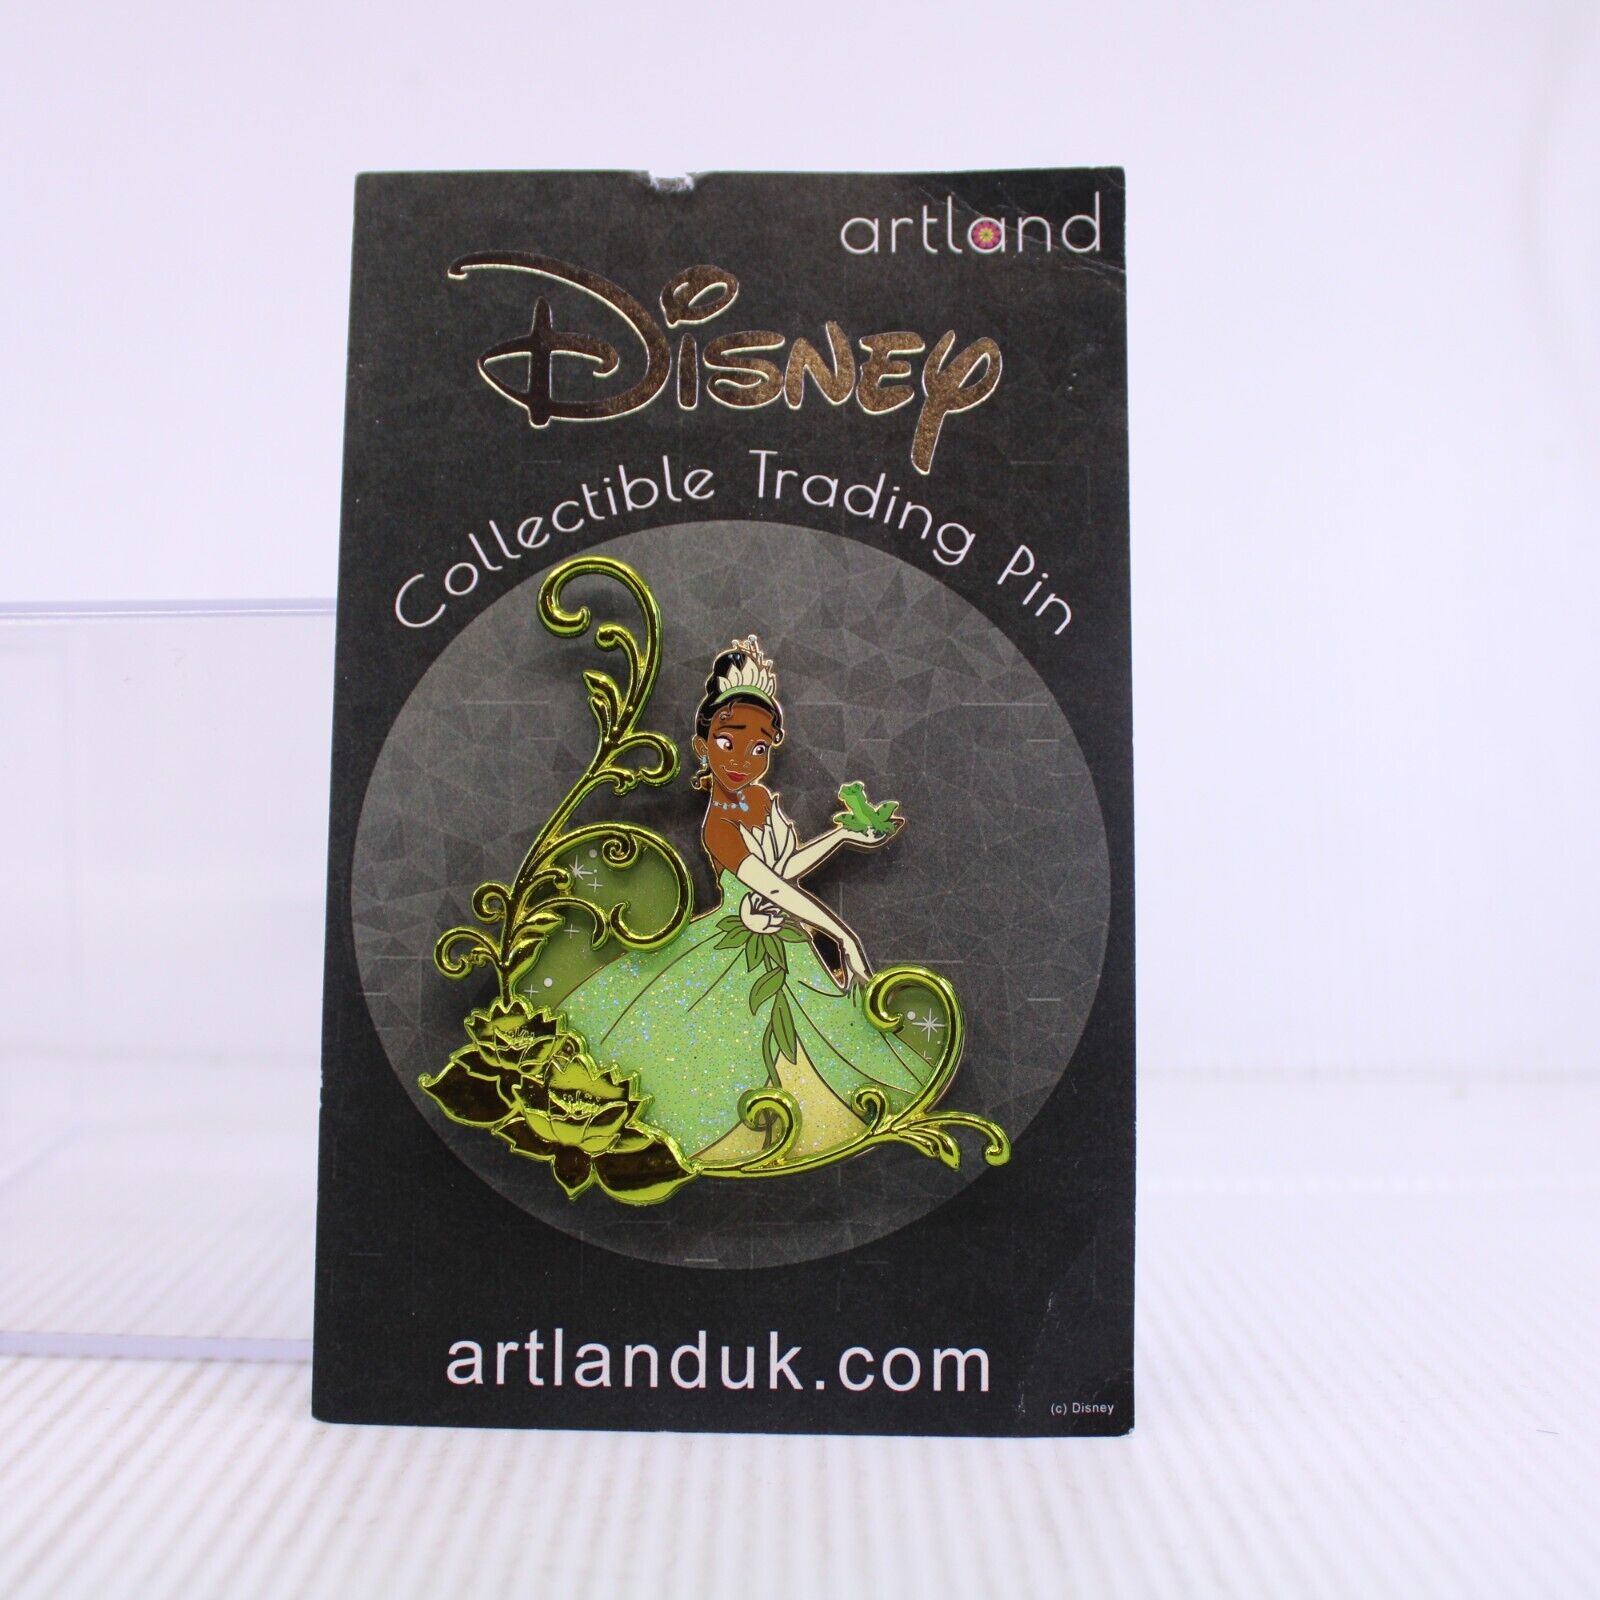 A5 Disney Artland Pin LE Pin Princess and the Frog Tiana